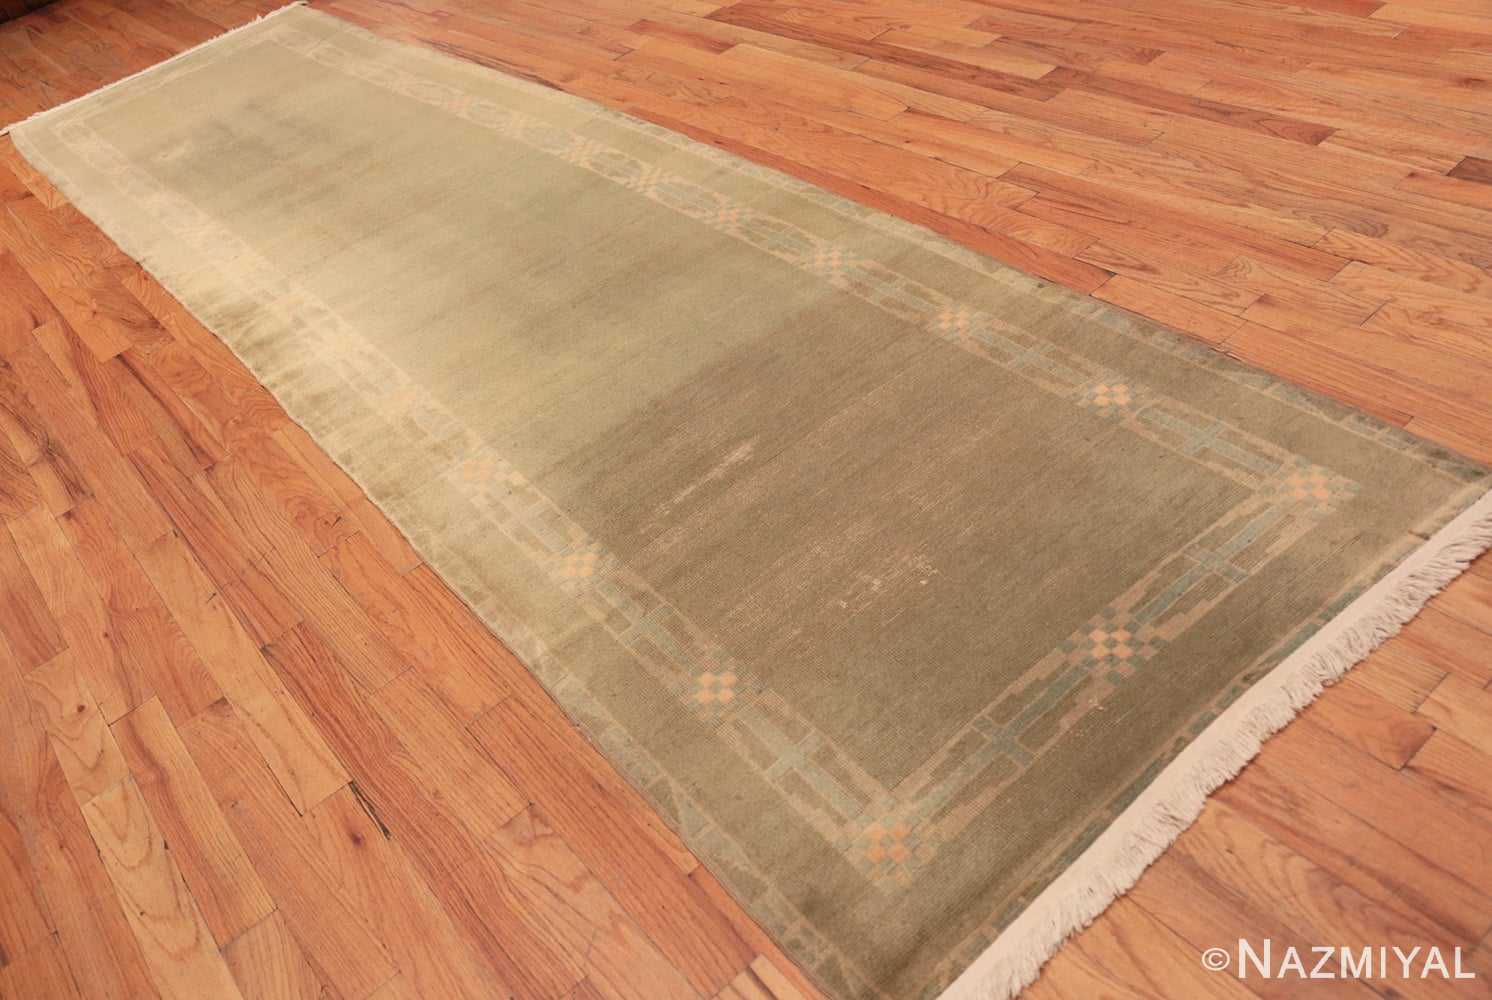 Full Vintage French Art Deco runner rug 43082 by Nazmiyal